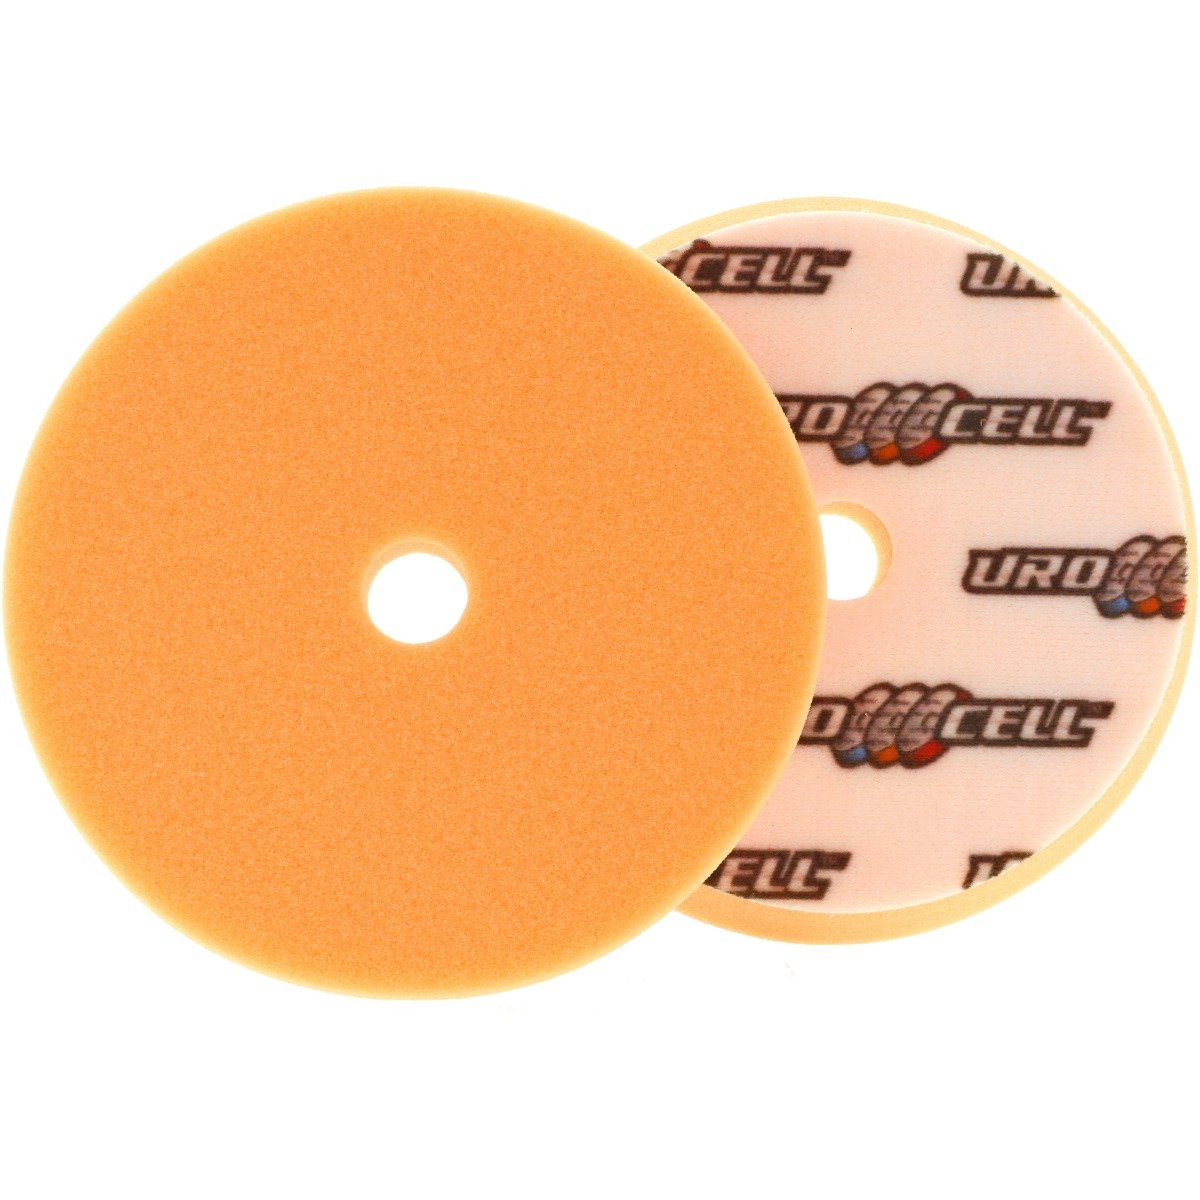 Uro-Cell Orange Polishing Foam Pad - 6 inch